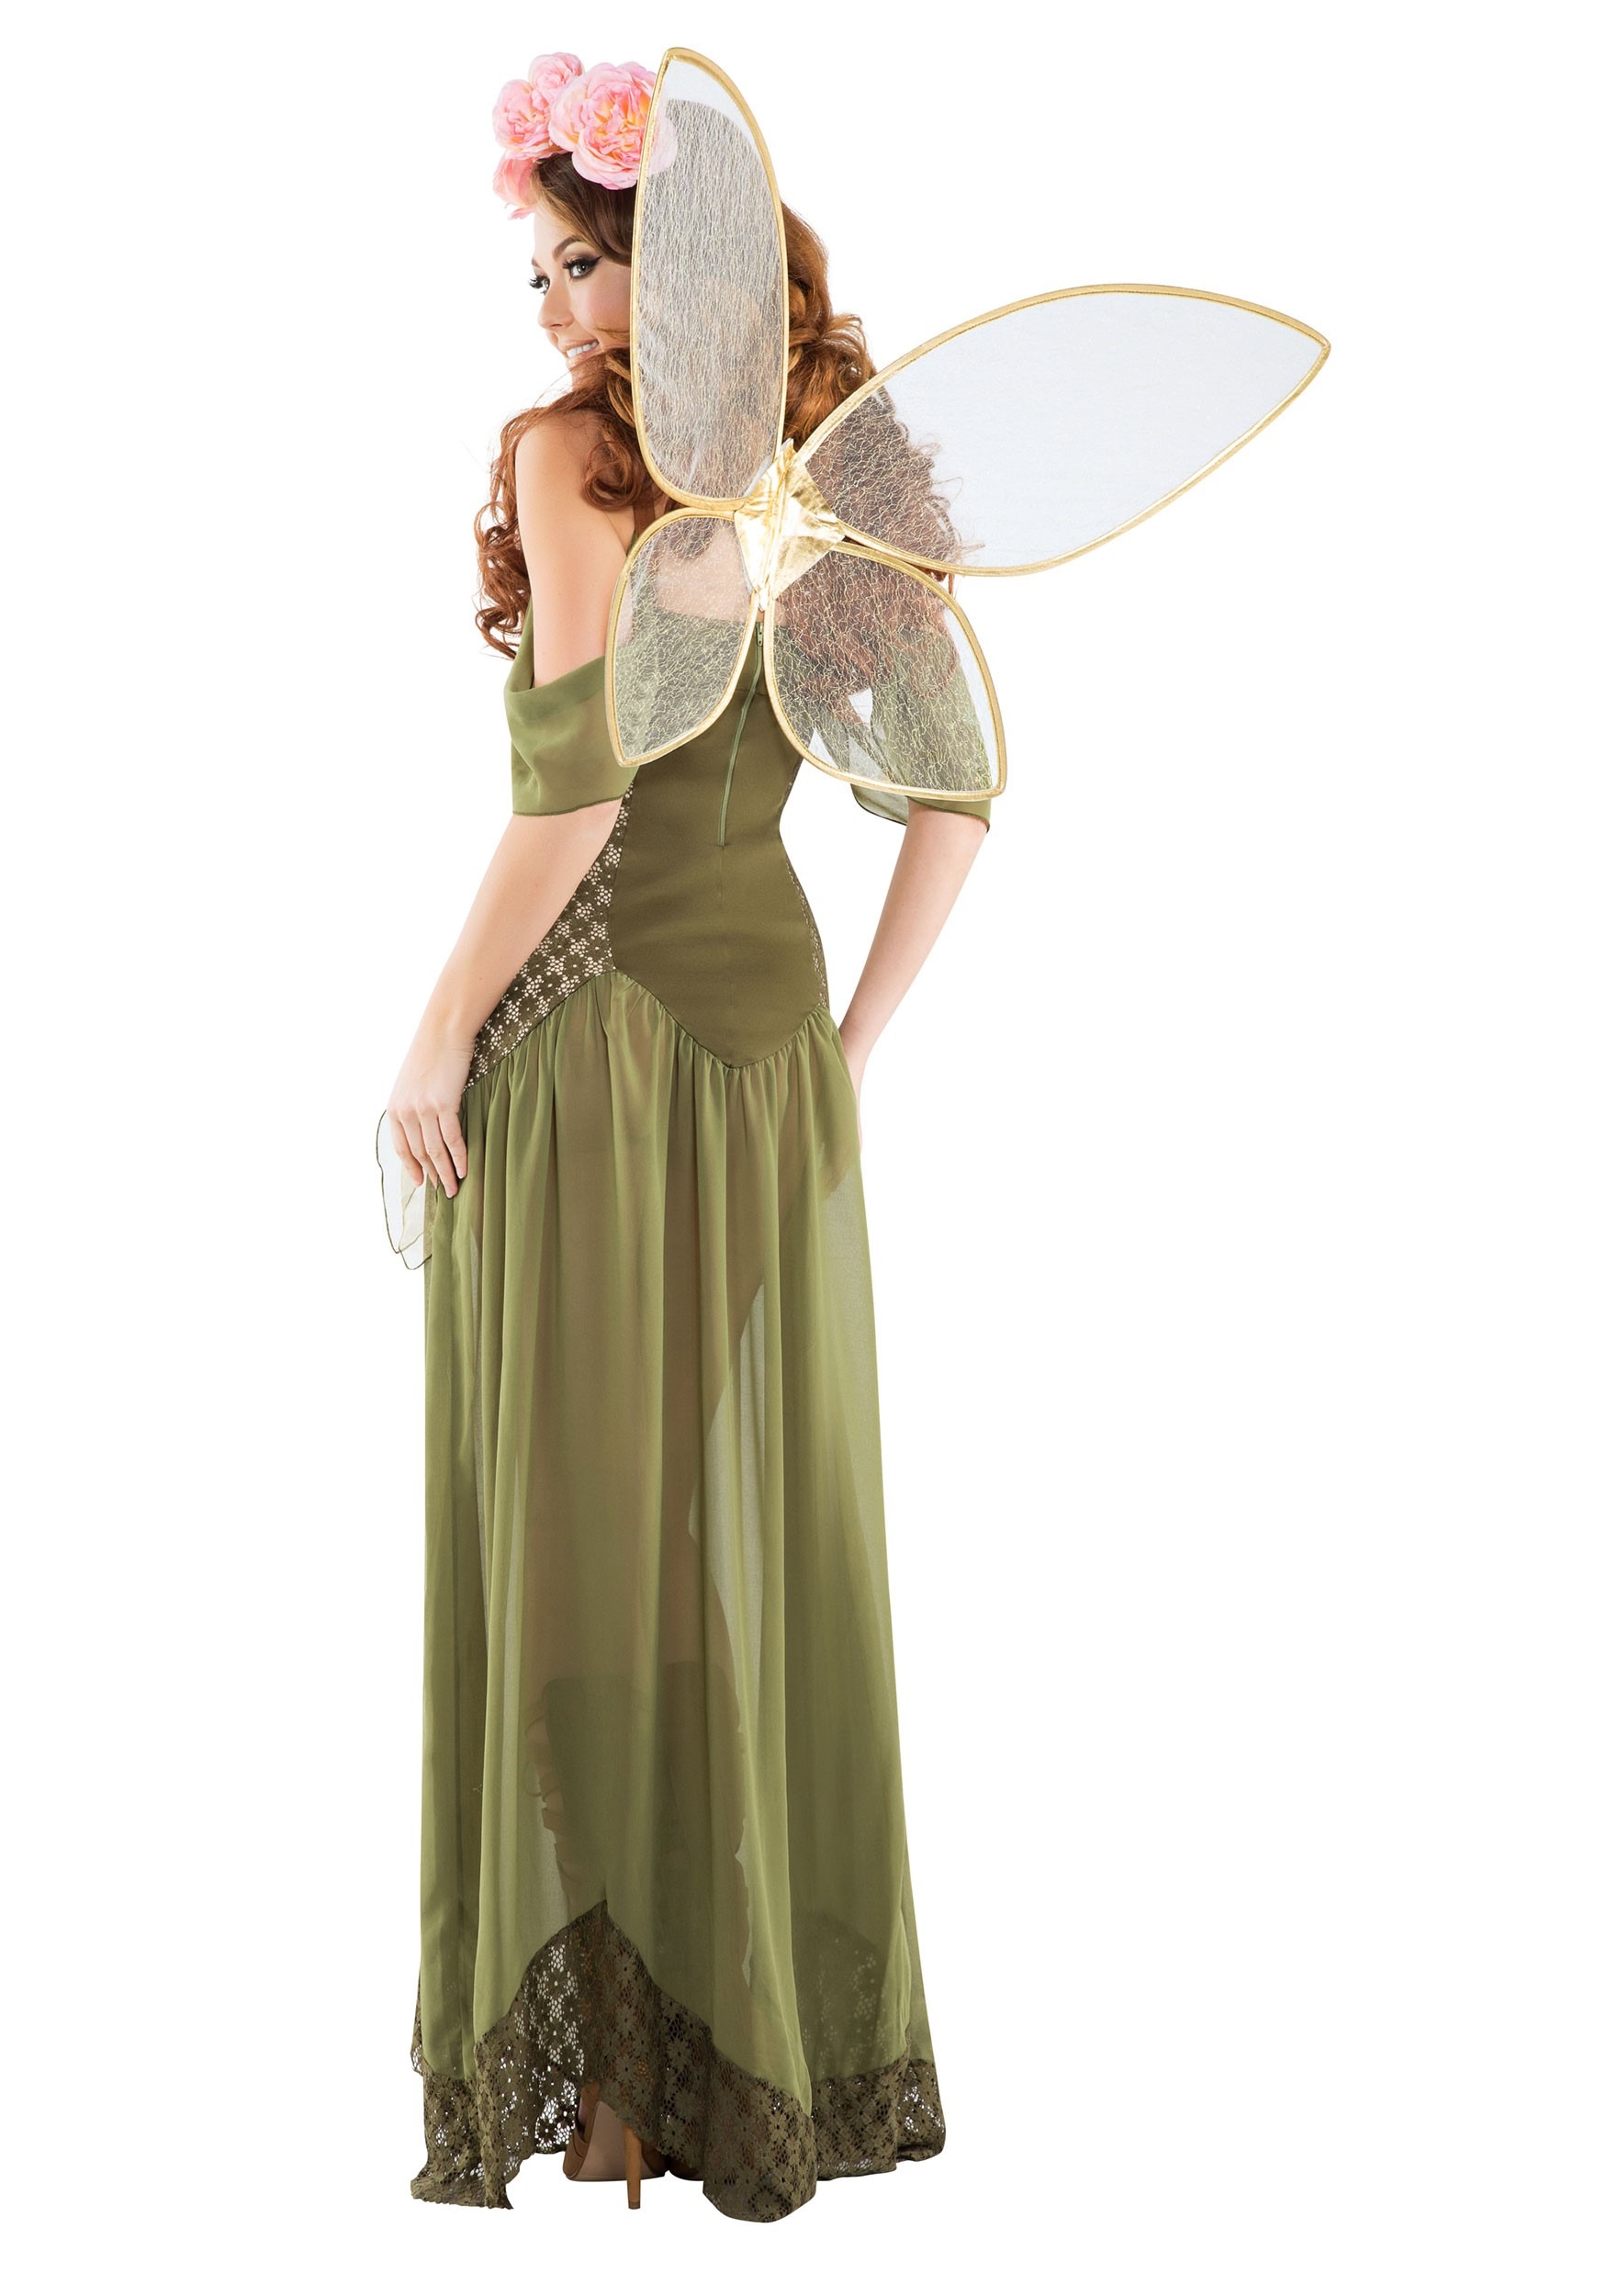 Rose Fairy Princess Women's Fancy Dress Costume